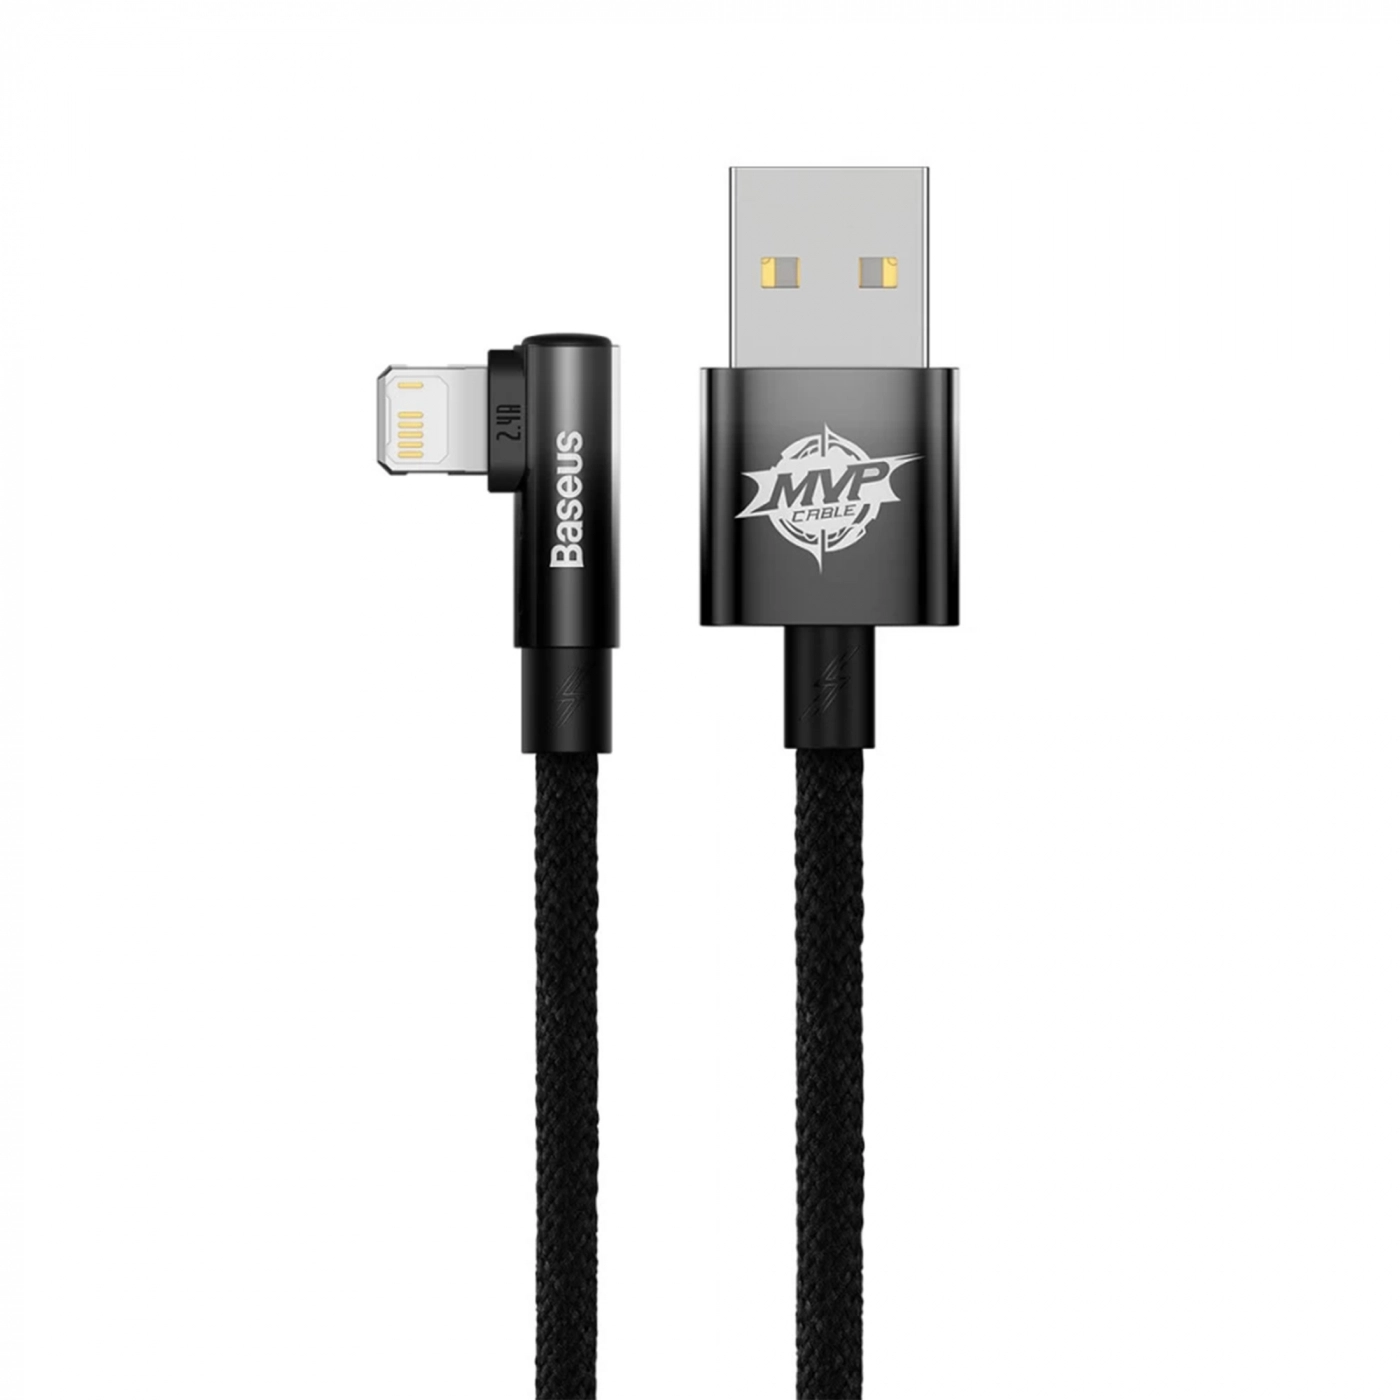 Купить Кабель Baseus MVP 2 Elbow-shaped Fast Charging Data Cable USB to iP 2.4A 1m Black - фото 1